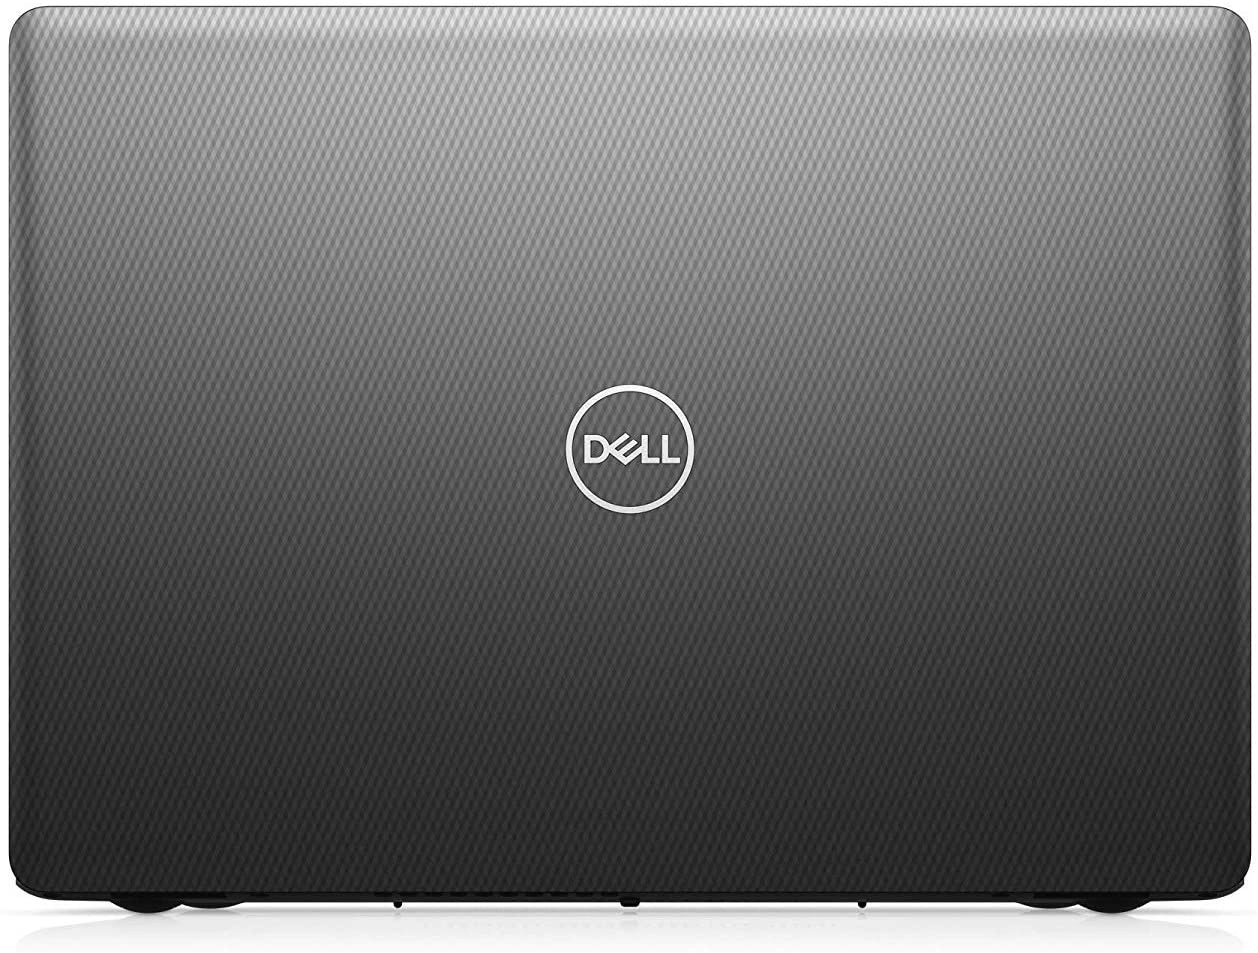 Dell I3493-3464BLK-PUS laptop image